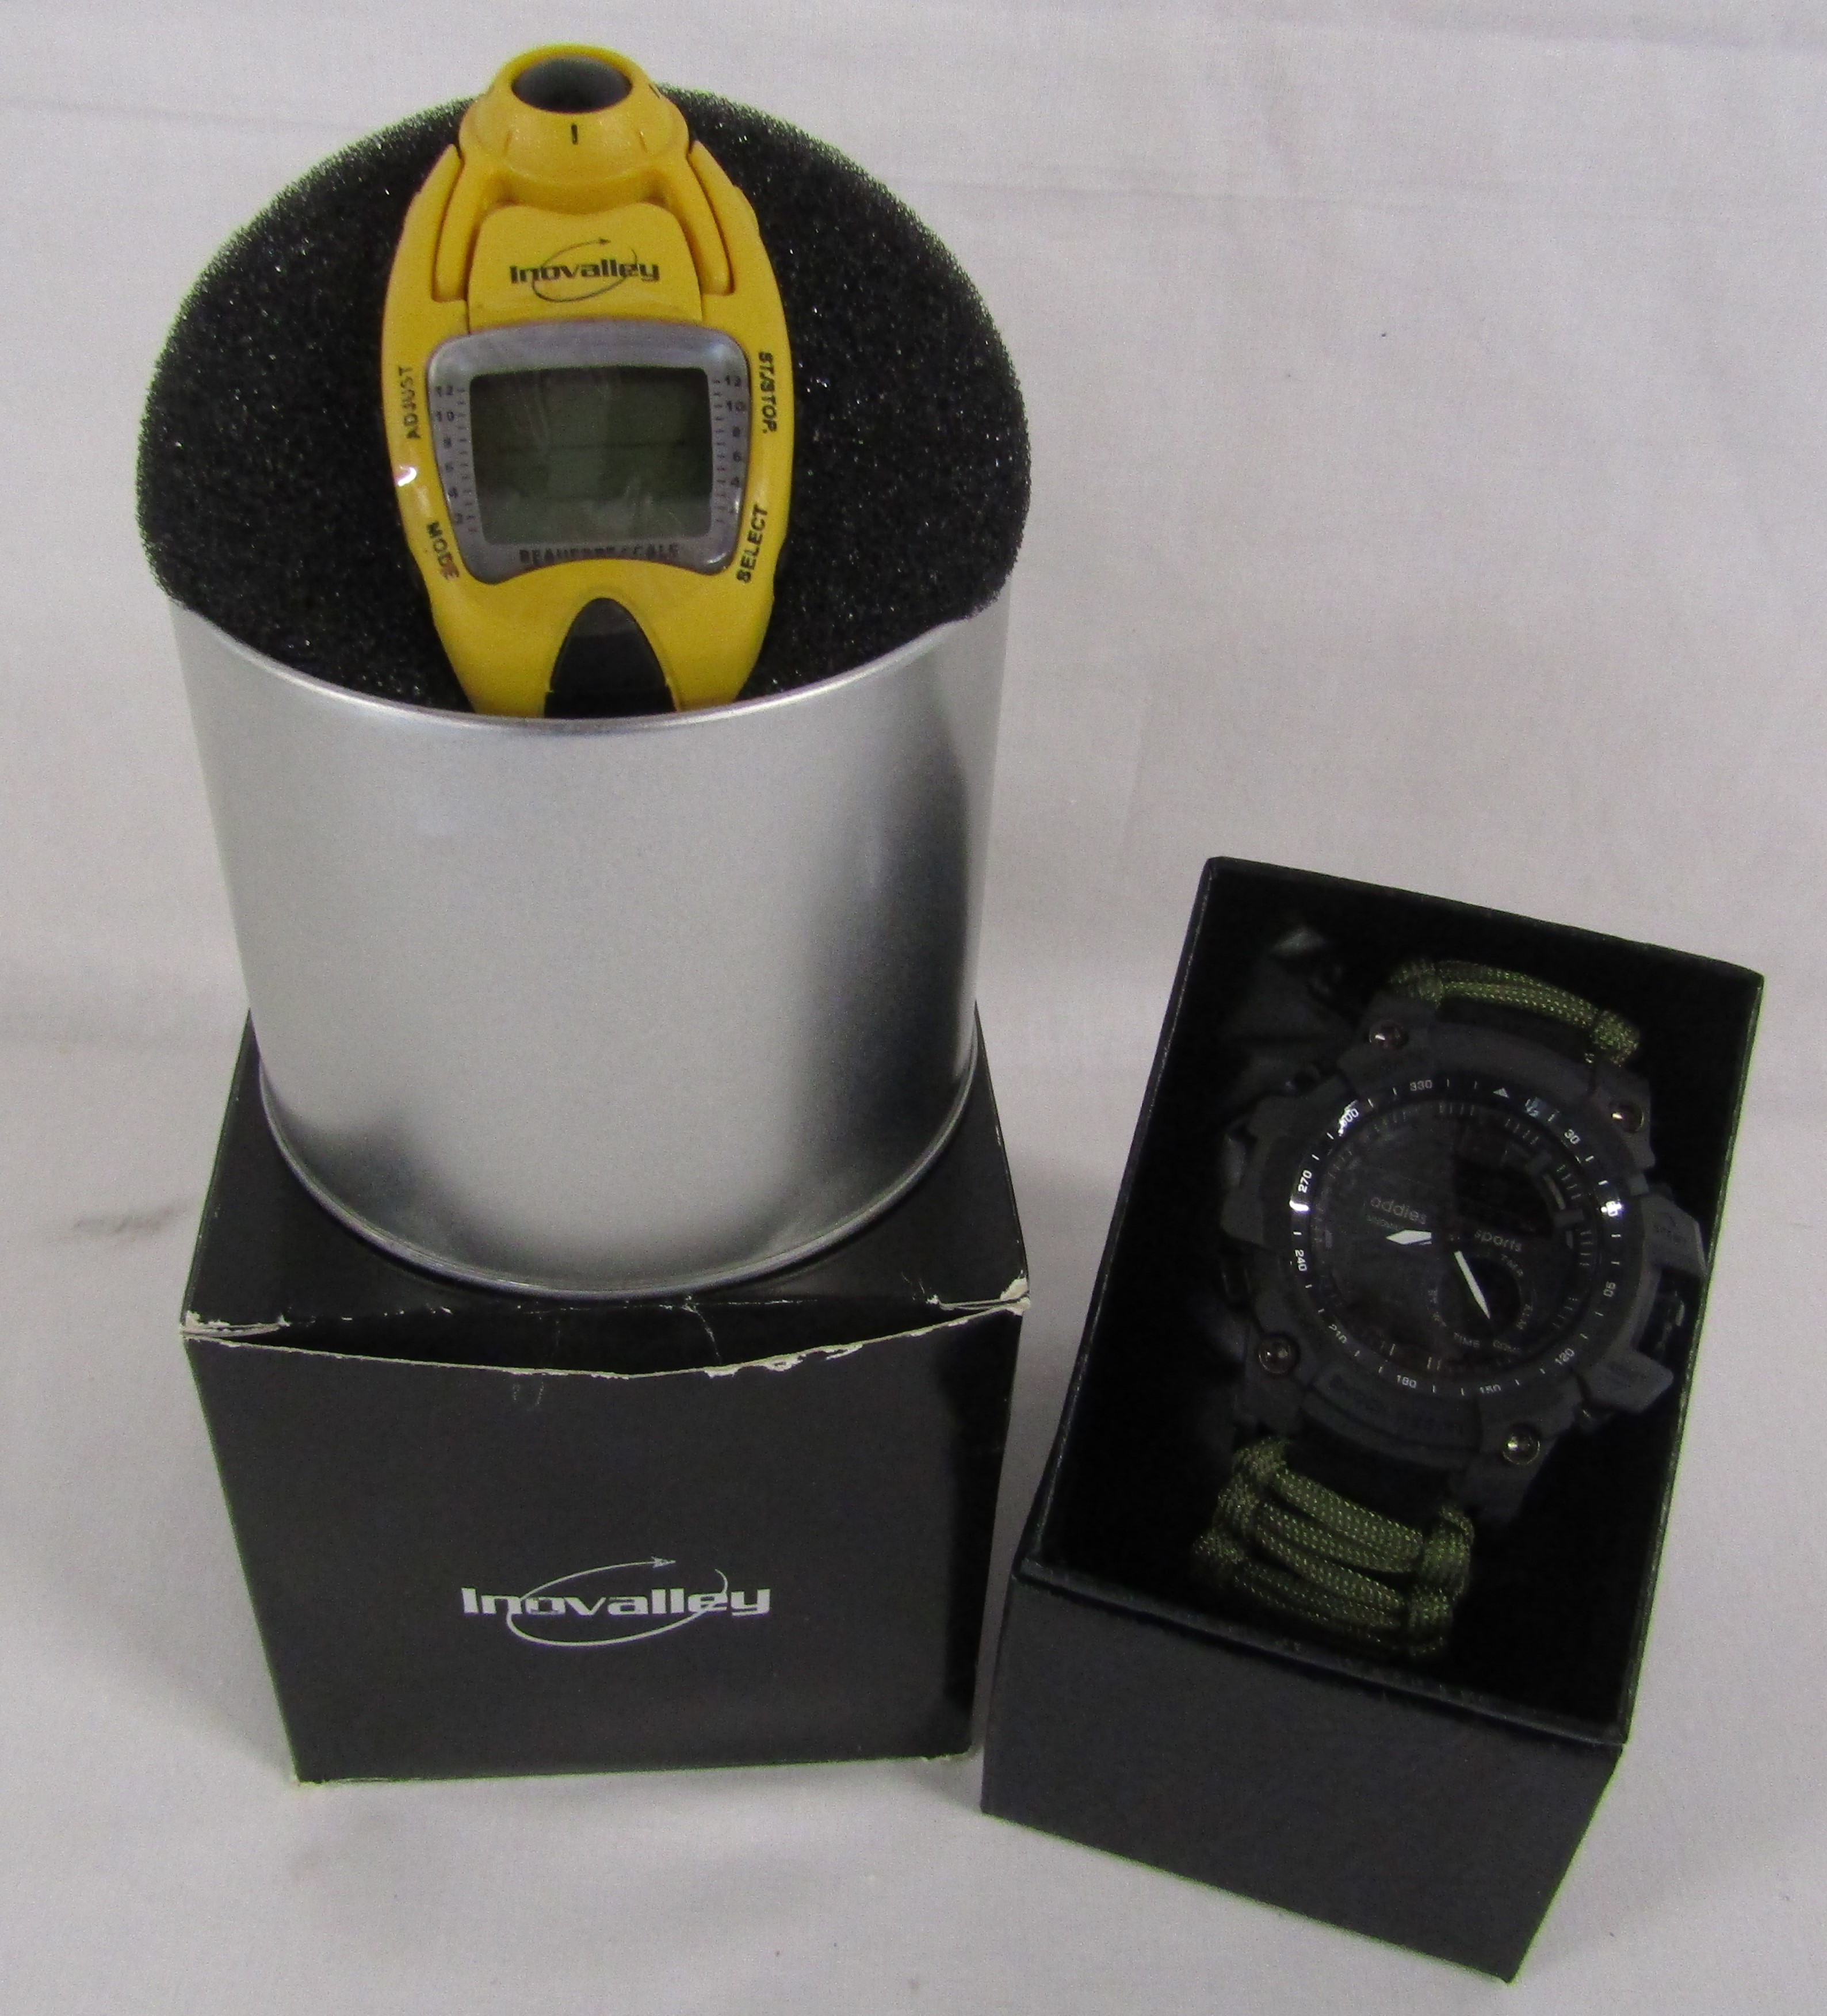 Addies MY-1605 utility sports watch and Inovalley anemomitor windmaster watch